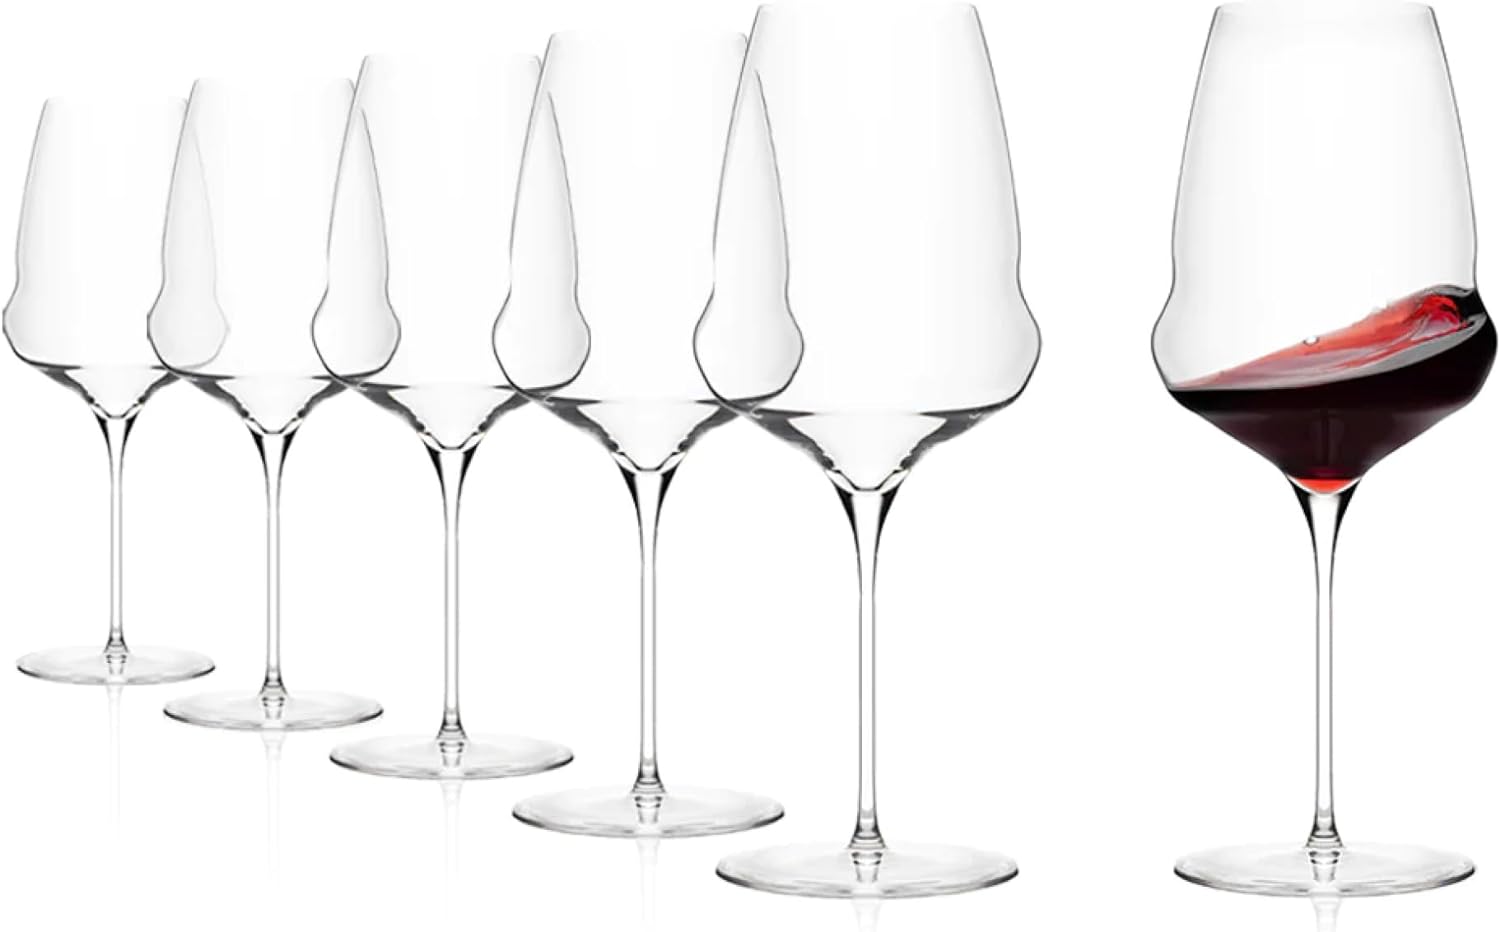 Stölzle Lausitz Bordeaux Glasses Cocoon/Red Wine Glass Bordeaux Set of 6 High Quality Red Wine Glasses Large Extravagant Wine Glasses Red Wine Large Wine Glasses Woblets Glass